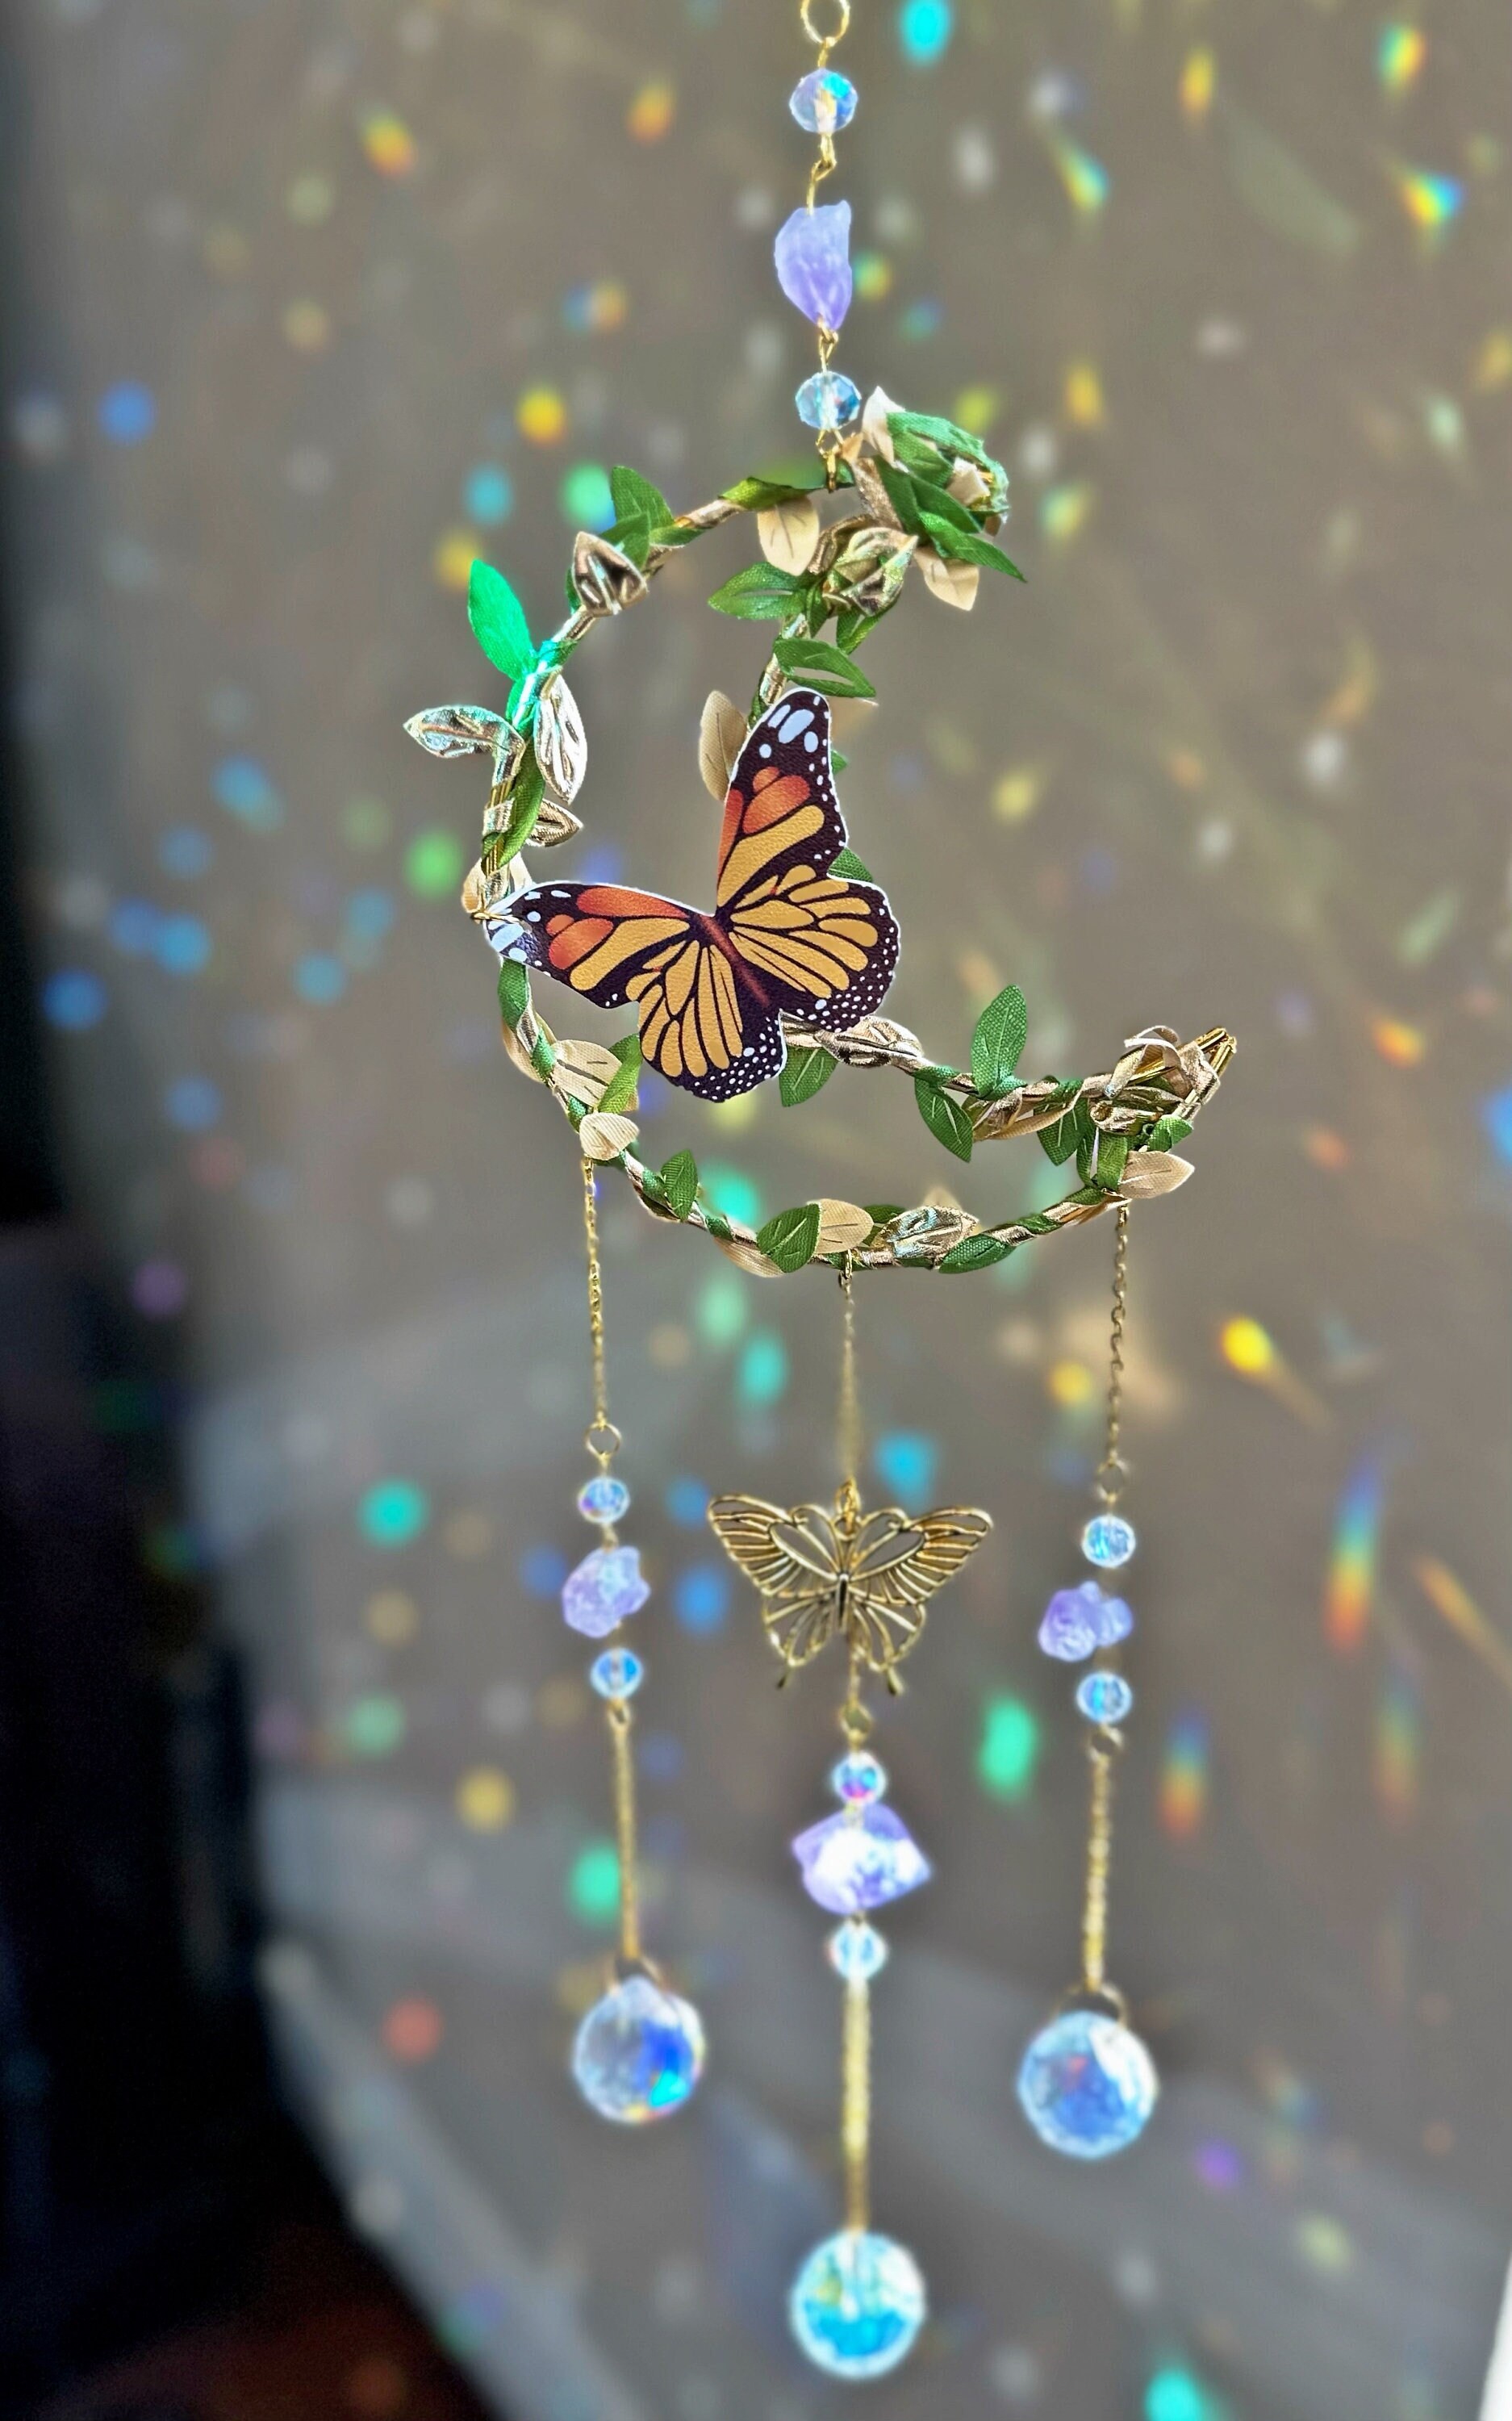 Butterflies Crystal Suncatcher Hanging Crystals for Decoration Sun Catchers